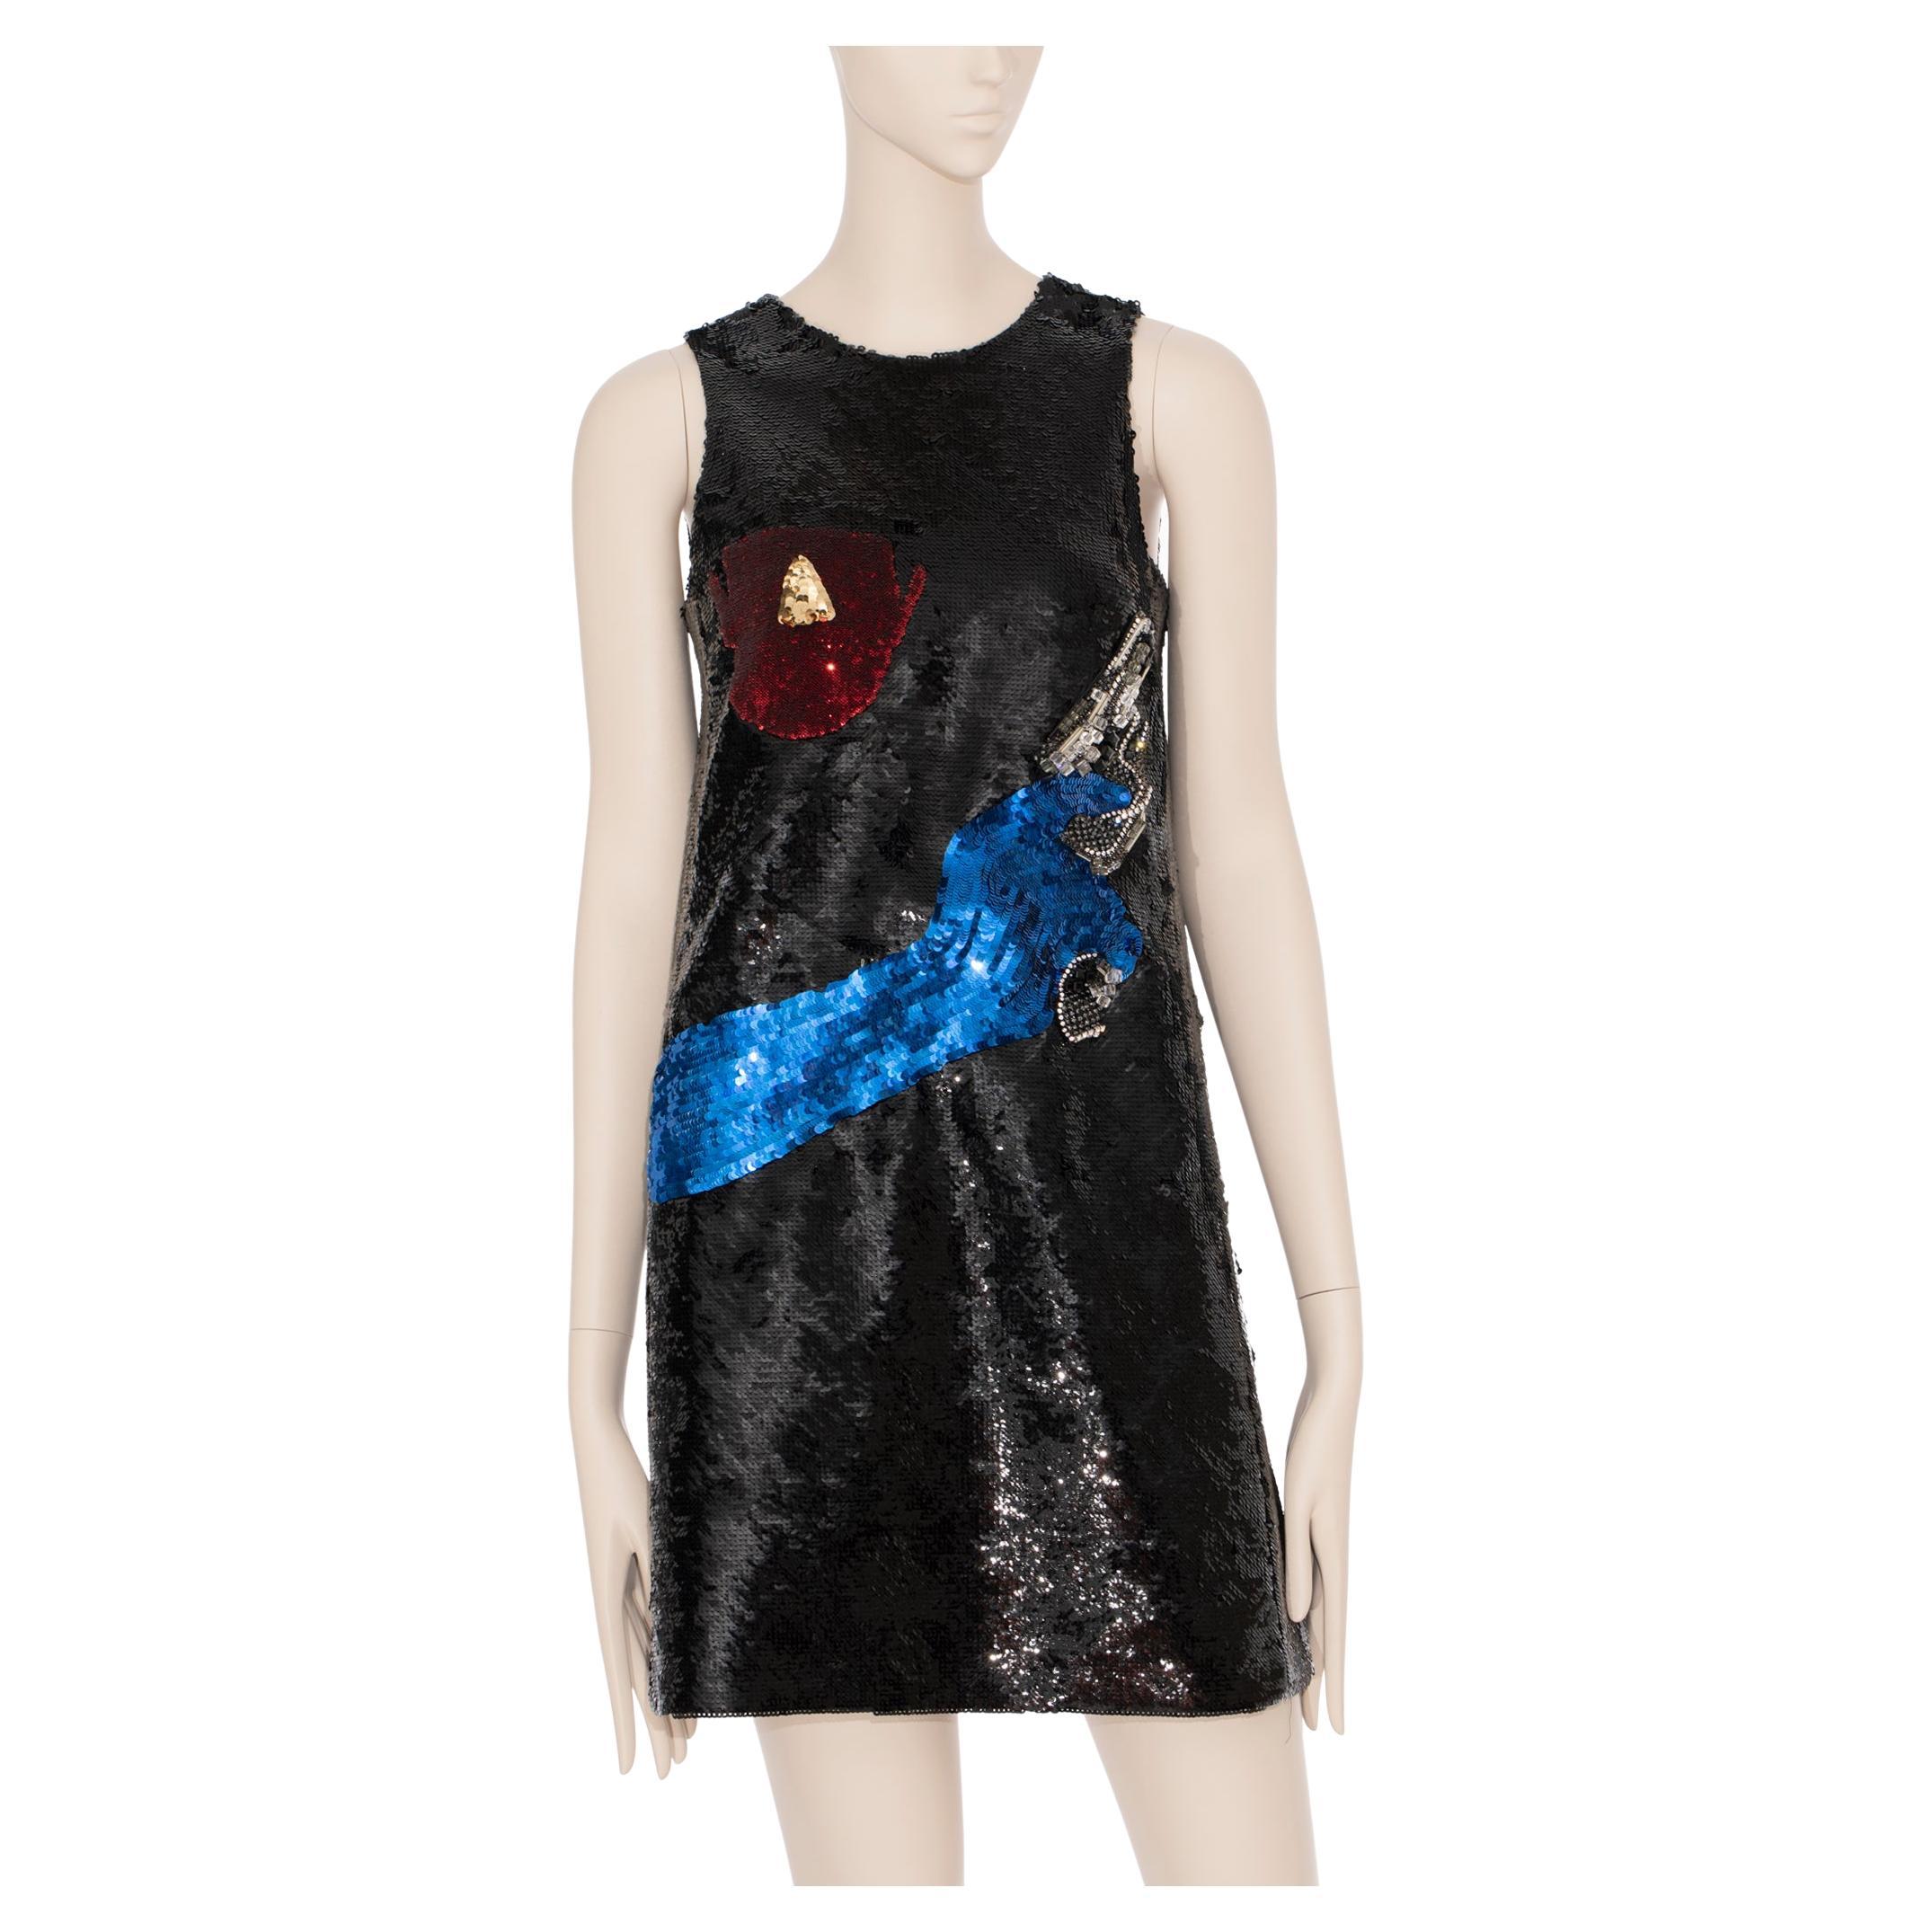 Saint Laurent X John Baldessari by Hedi Slimane Sequin Mini Dress Look #13 For Sale